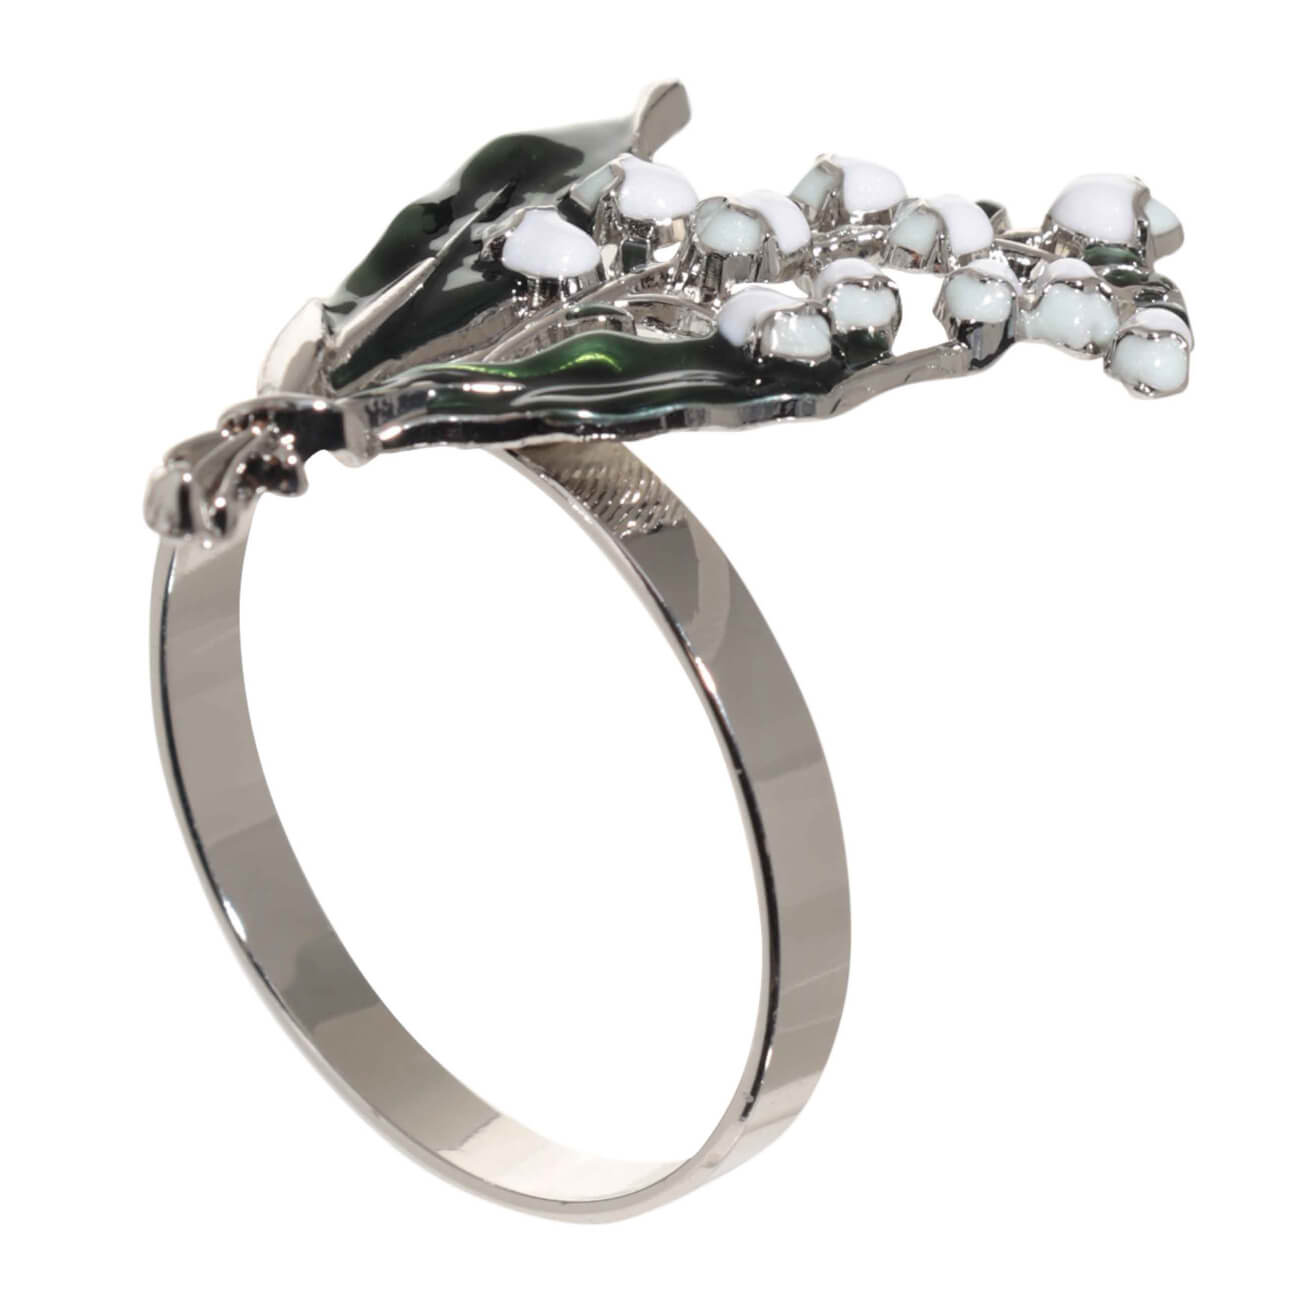 kuchenland кольцо для салфеток 5 см 2 шт металл серебристое кольцо fantastic r Кольцо для салфеток, 5 см, металл, зелено-серебристое, Ландыш с листьями, May-lily